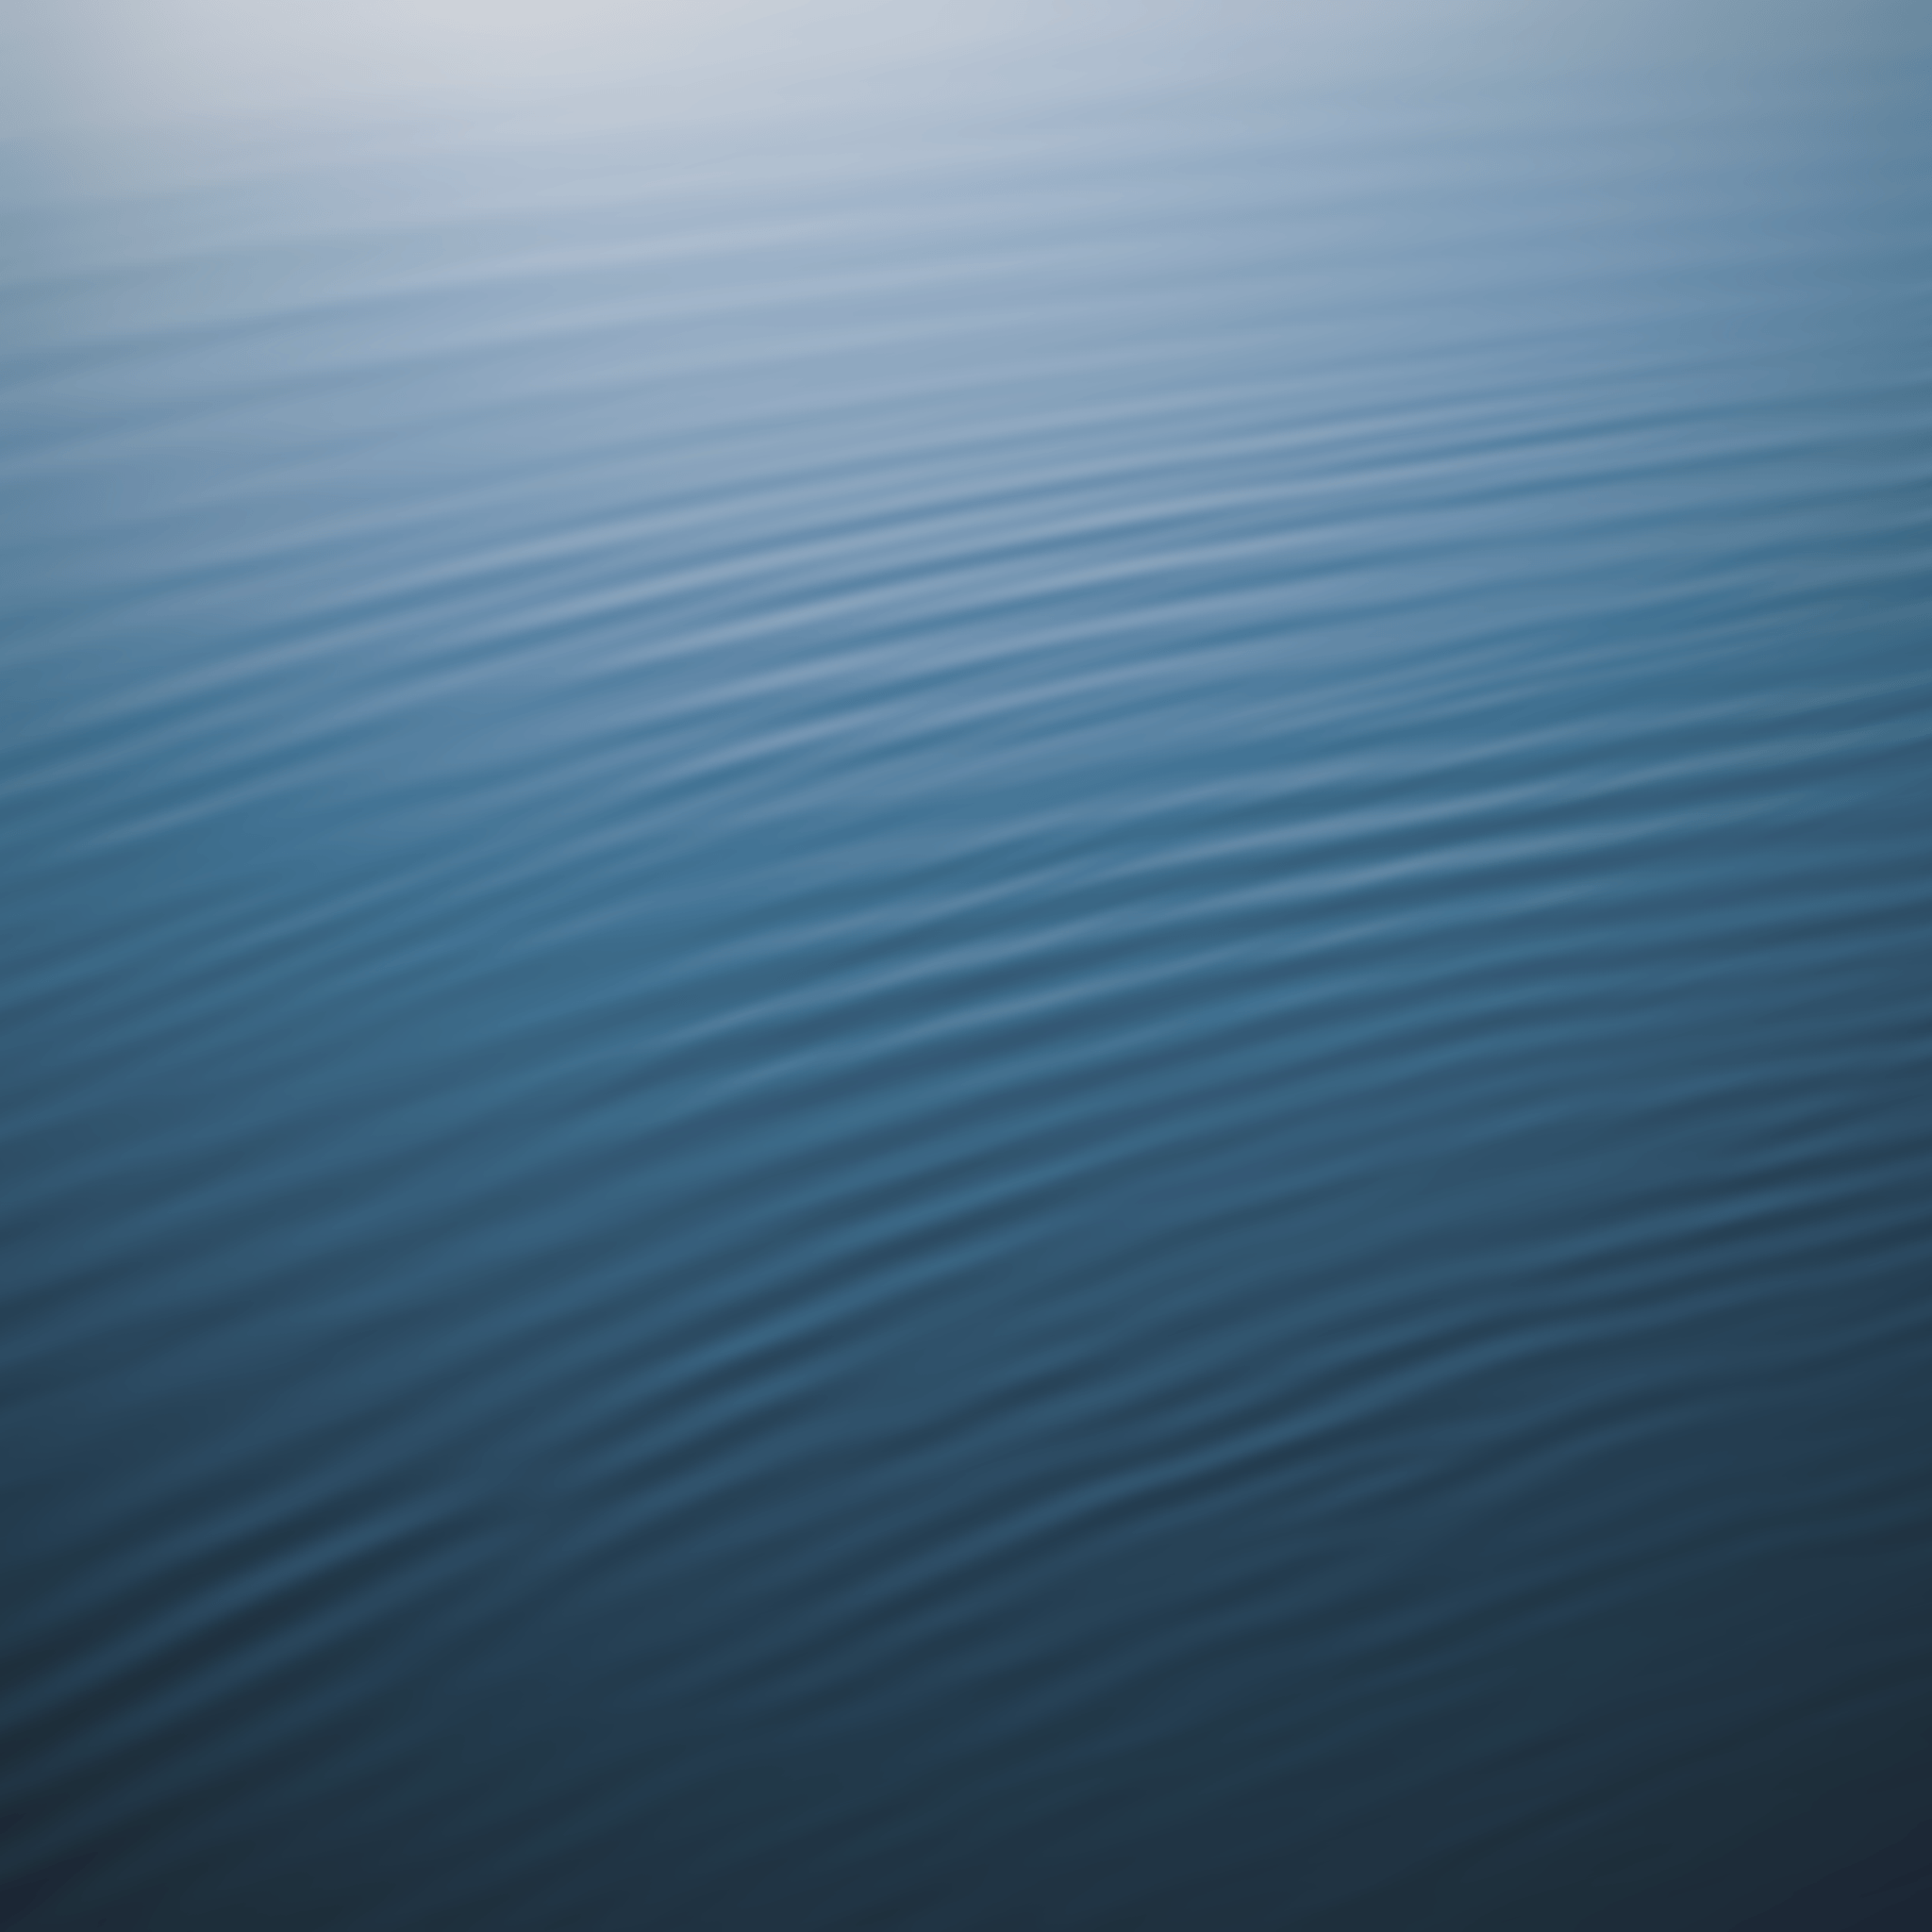 iPad 6 default ripple wallpaper redux